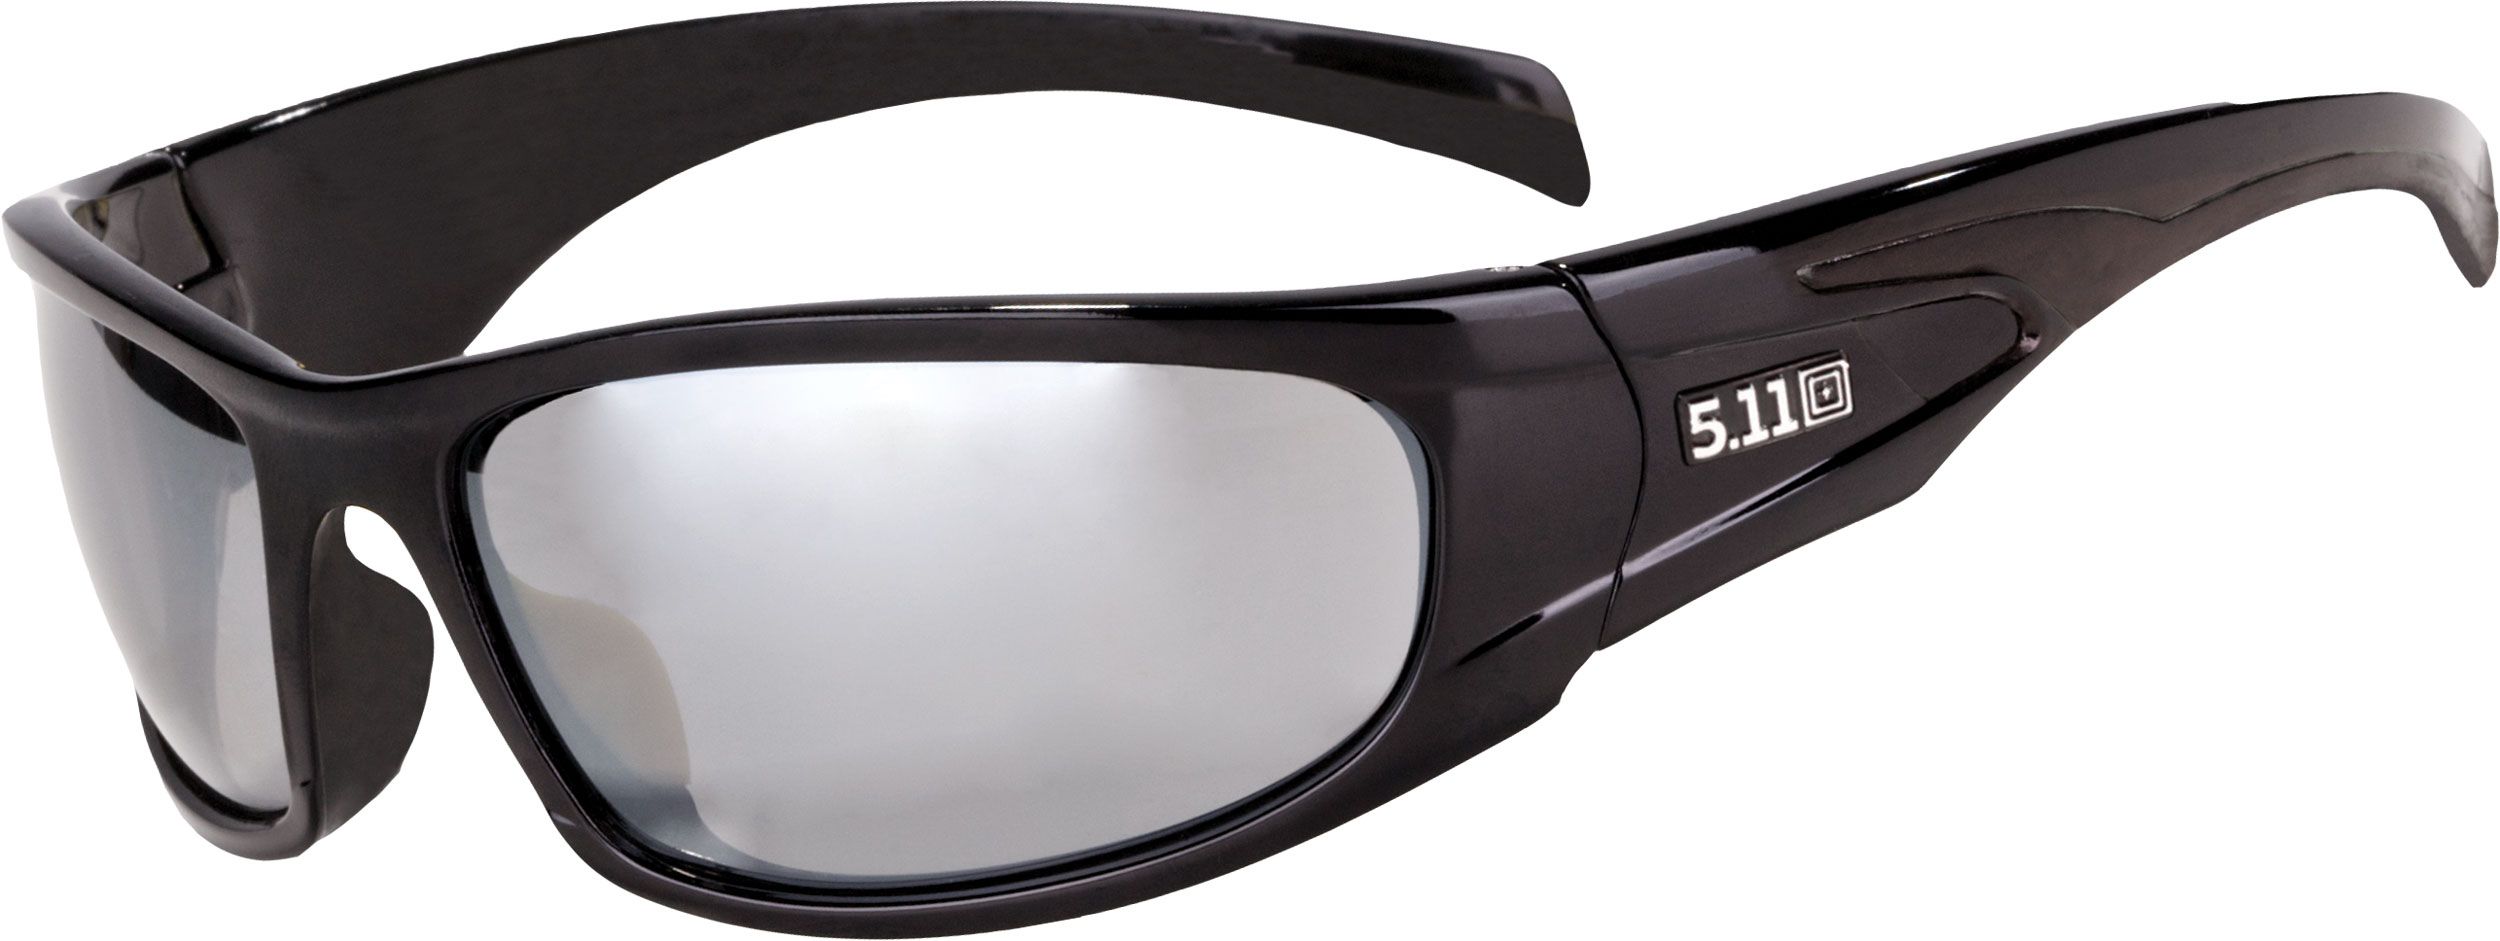 5.11 Tactical Men's Tomcat Black Oxide Polarized Sunglasses (Black